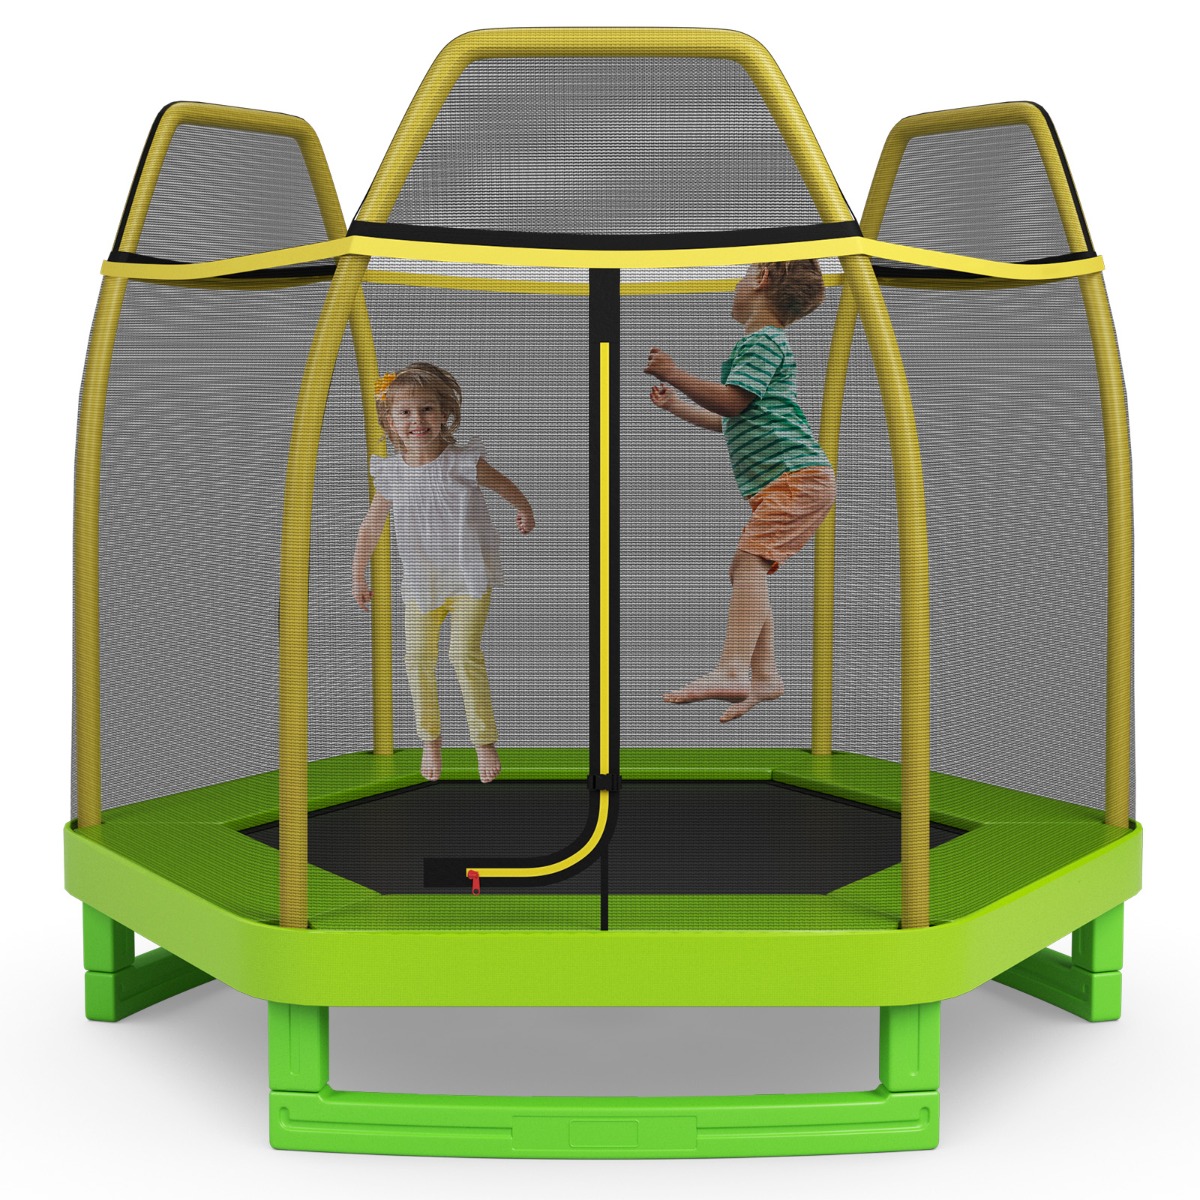 7_feet_kids_recreational_bounce_jumper_trampoline_green-1.jpg